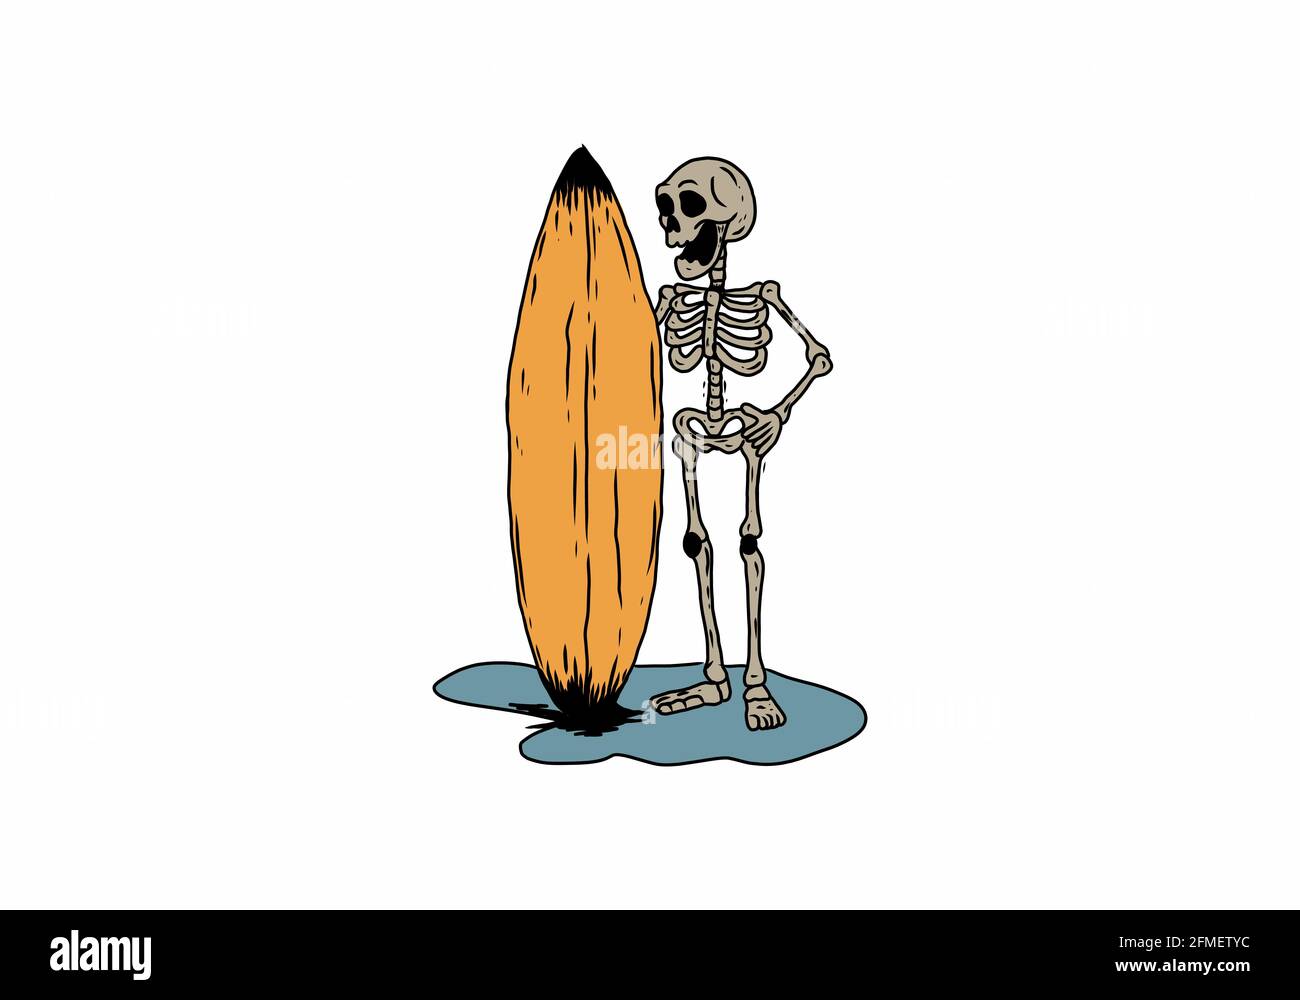 Illustration drawing of surfing skeleton design Stock Vector